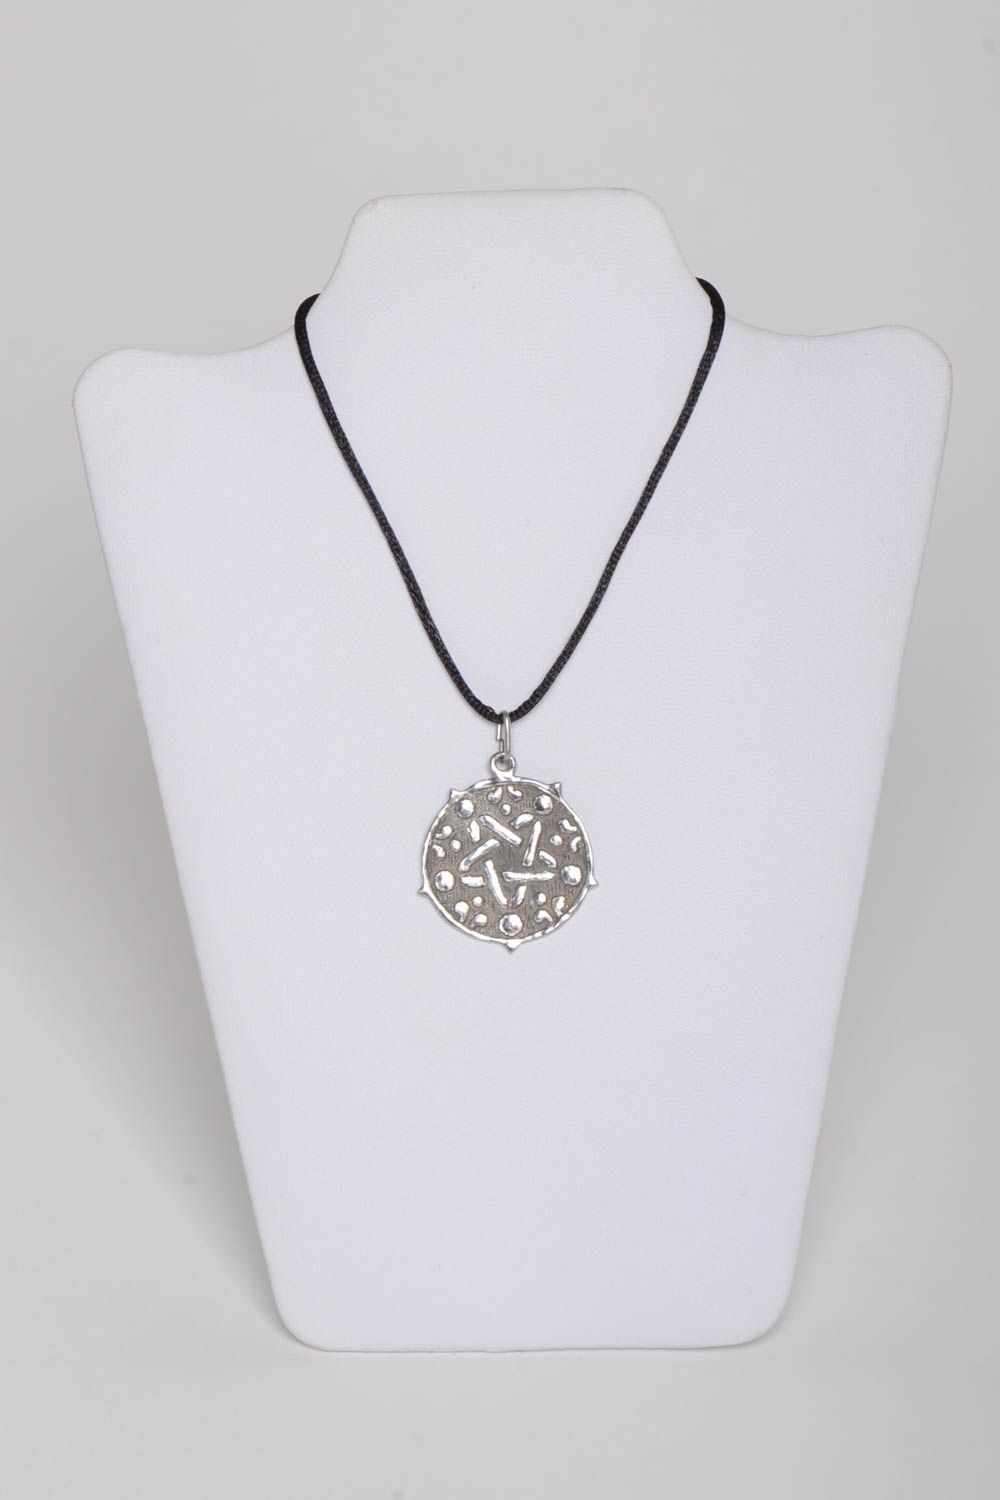 Unusual handmade metal pendant beautiful jewellery metal craft gift ideas photo 2